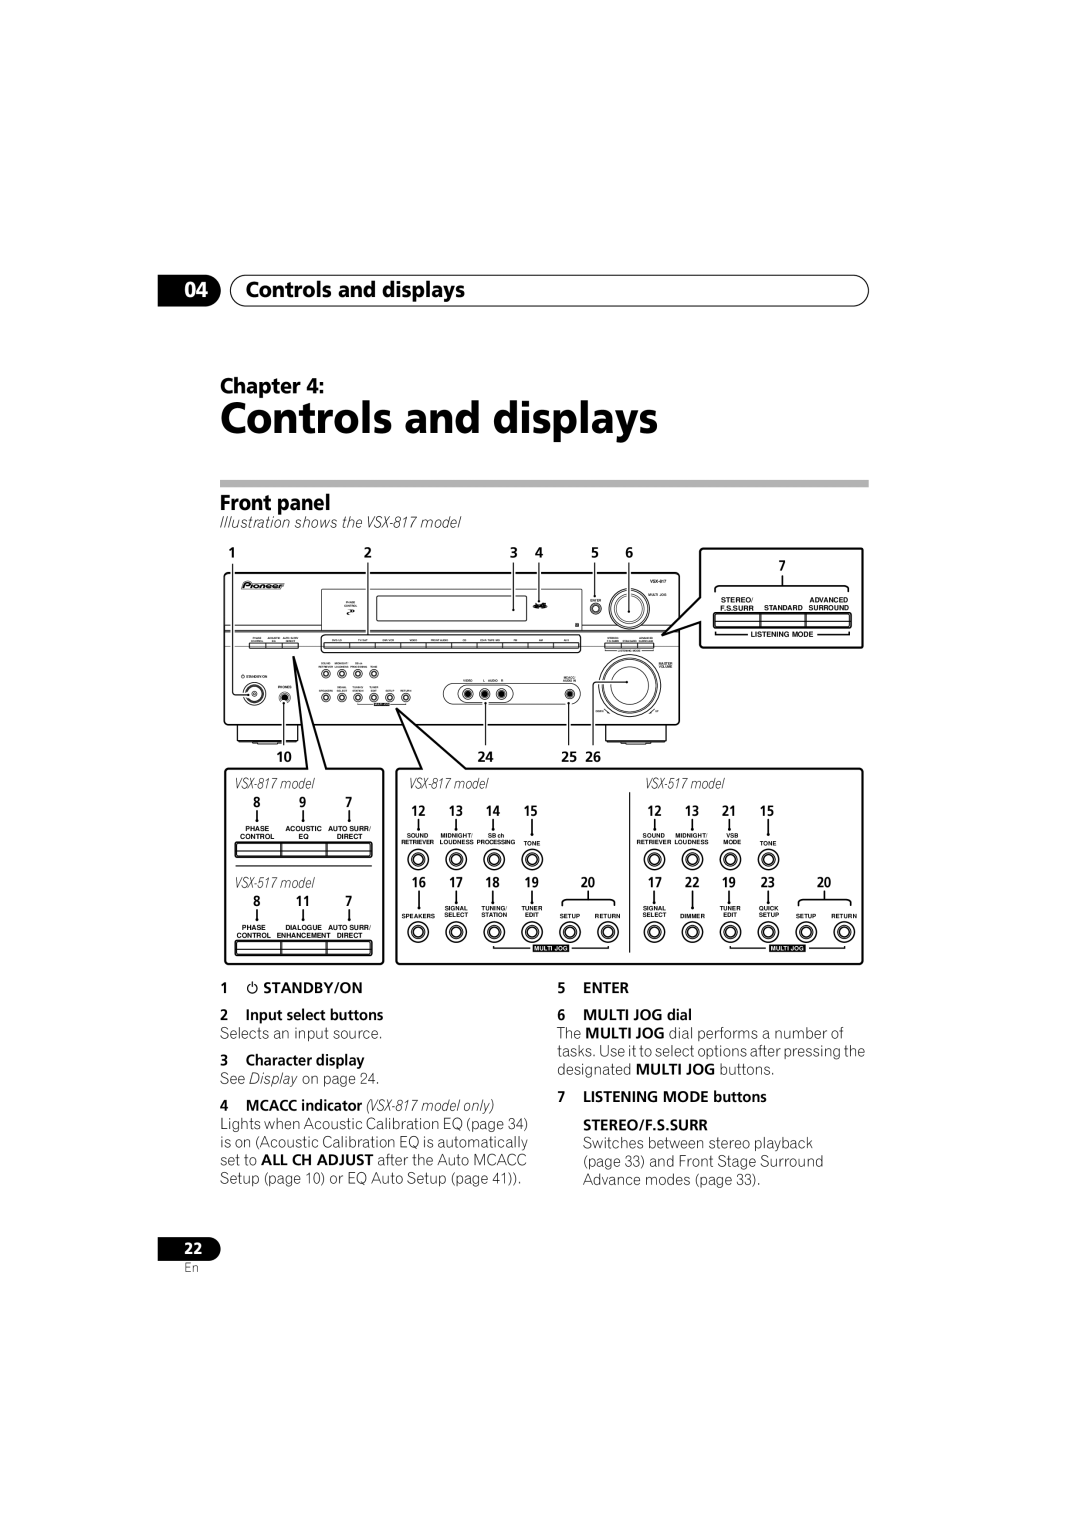 Pioneer VSX-517-S/-K 04Controls and displays Chapter, Front panel, Illustration shows the VSX-817model, VSX-517model 